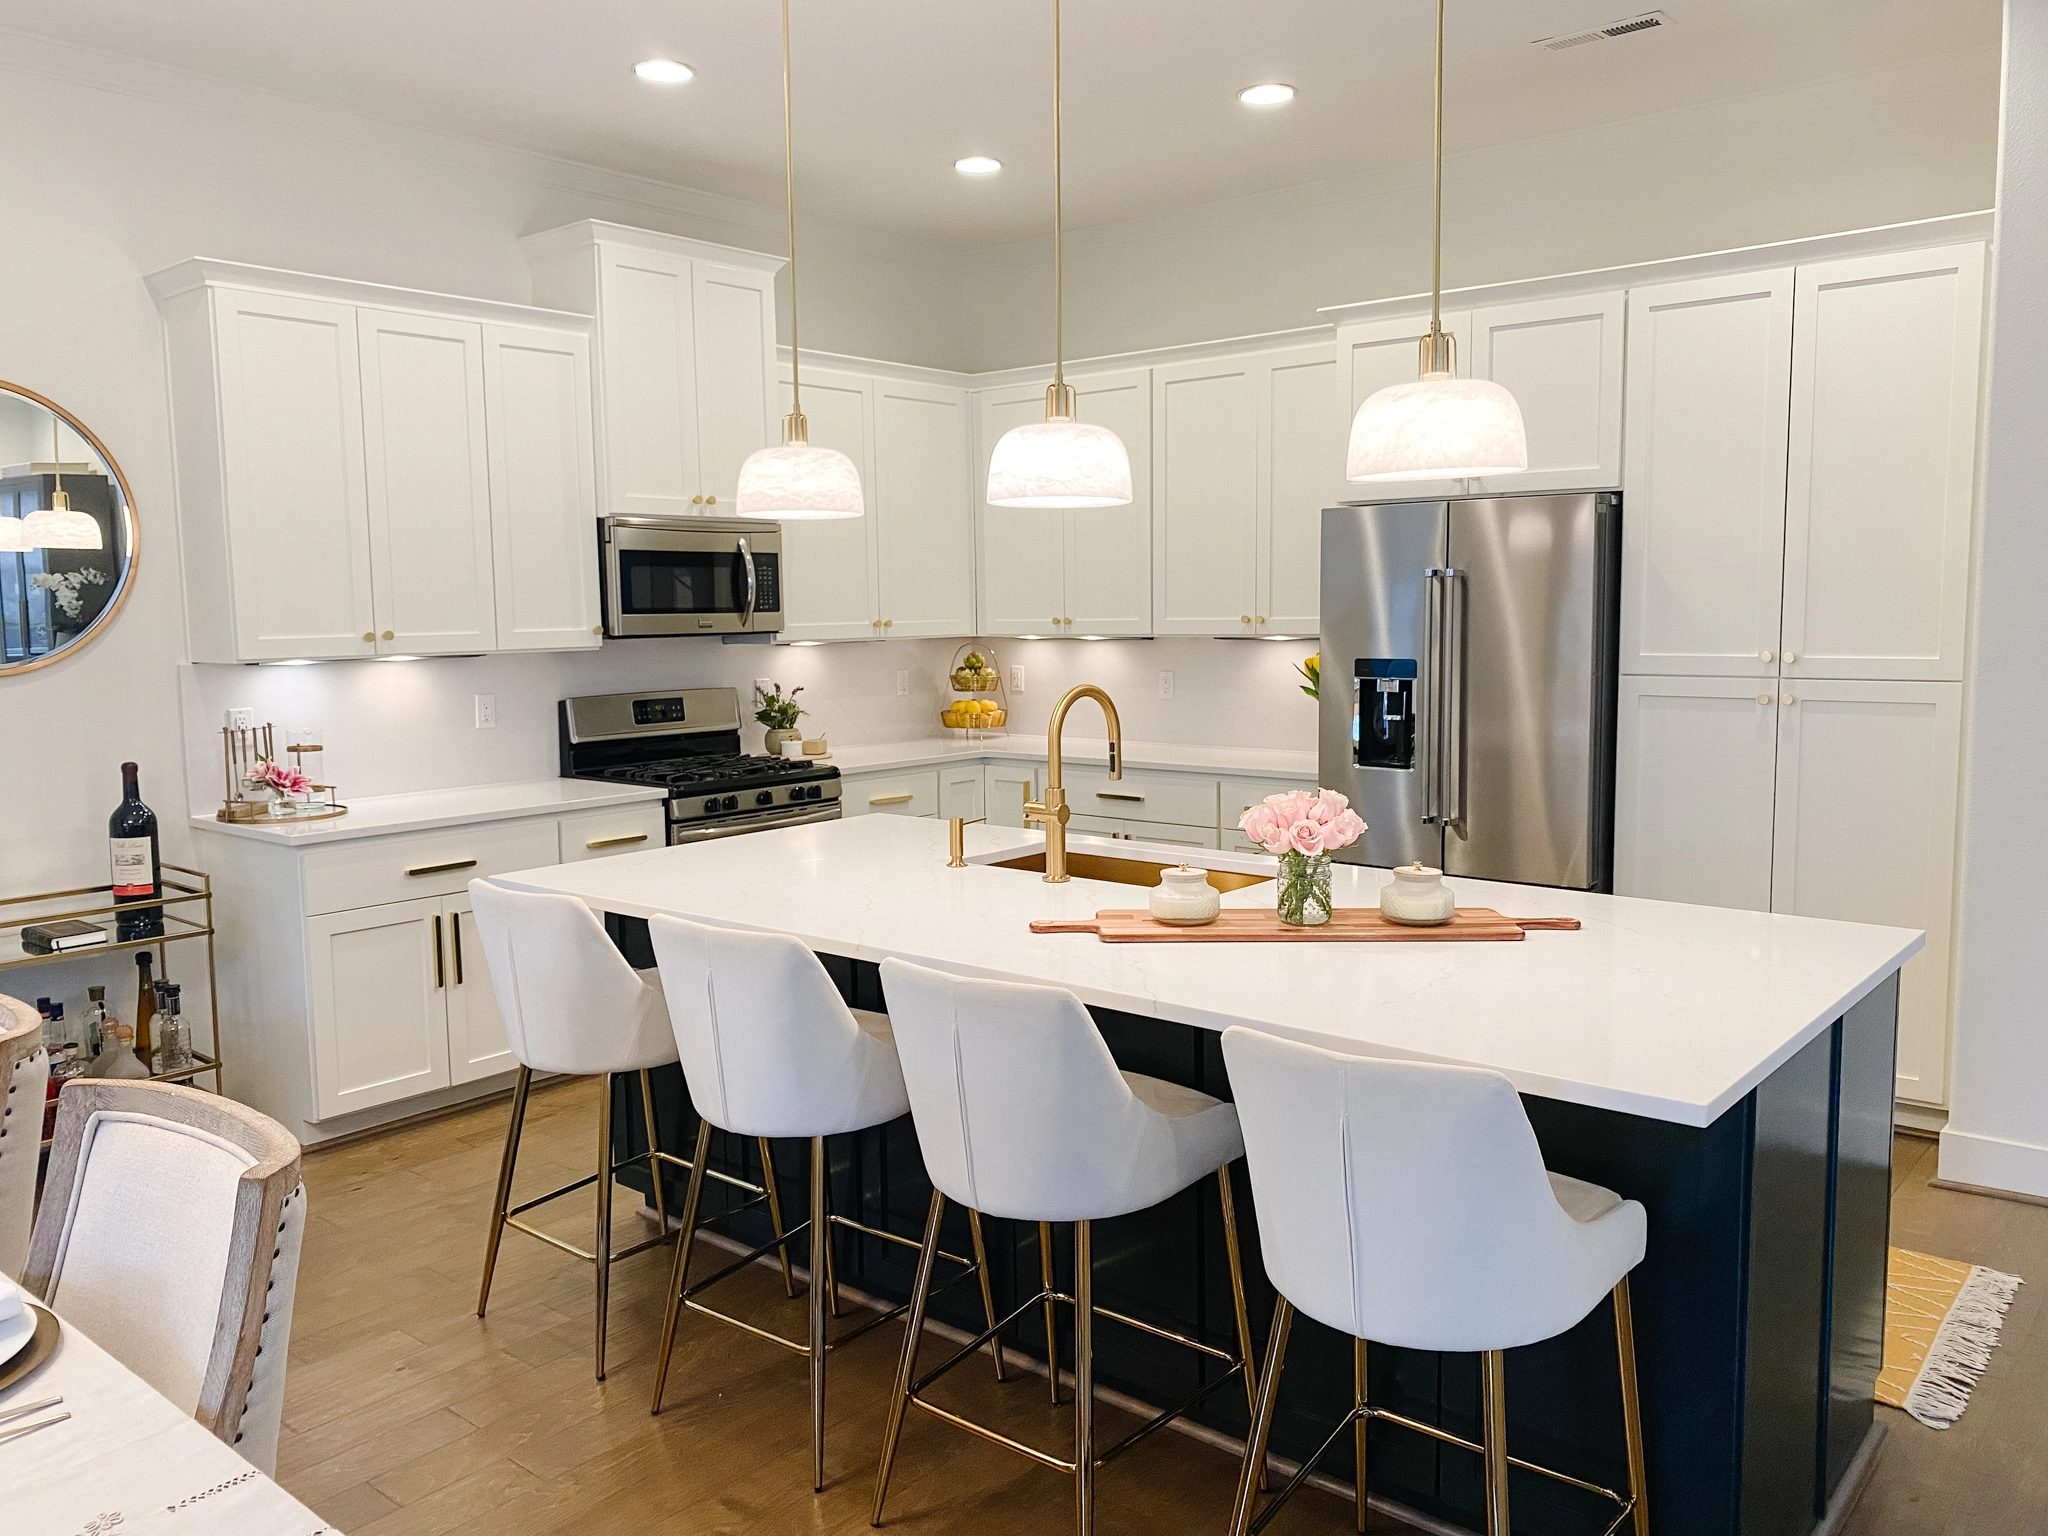 Kitchen Refresh2 - White remodeled kitchen  - Builder Grade To Kitchen Refresh from Woodland Construction Group